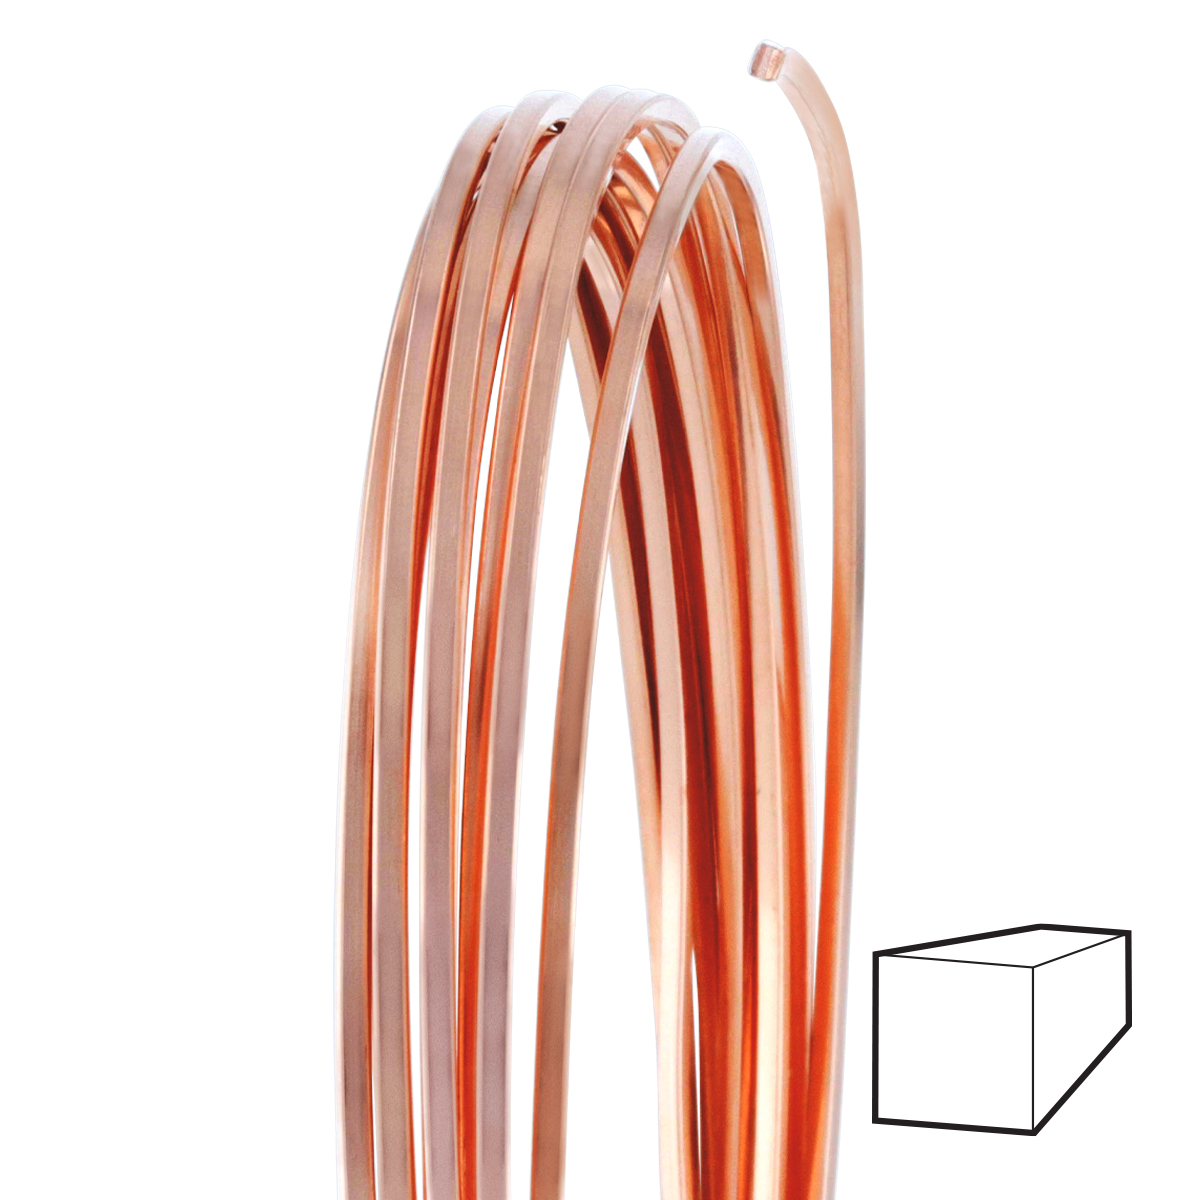 22 Gauge Square Half Hard Copper Wire: Wire Jewelry, Wire Wrap Tutorials